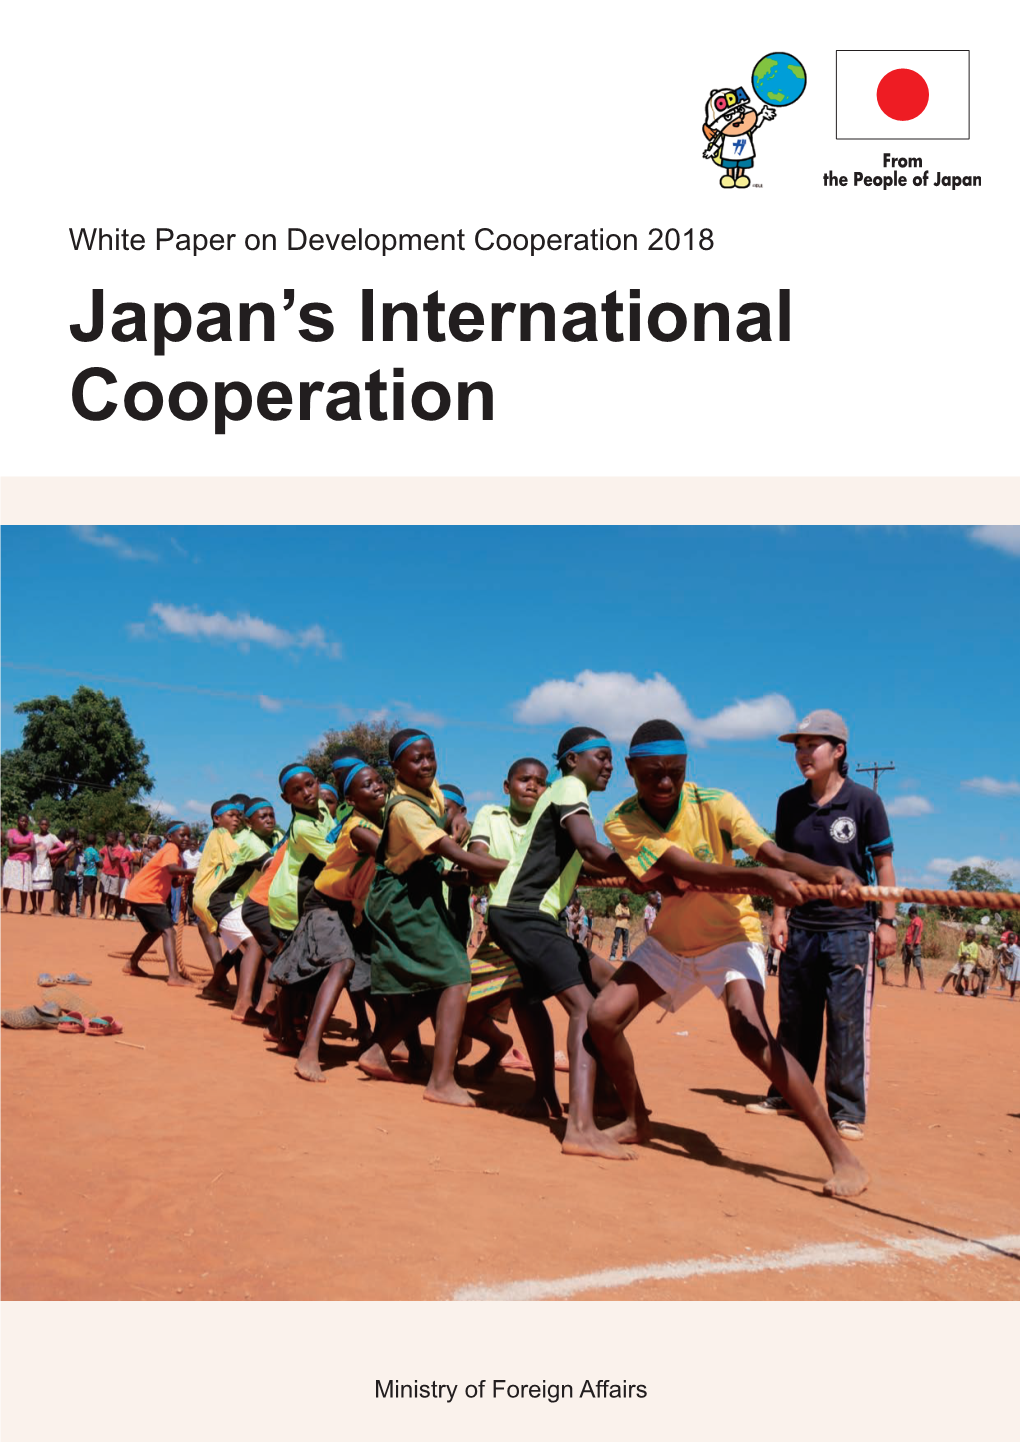 Japan's International Cooperation